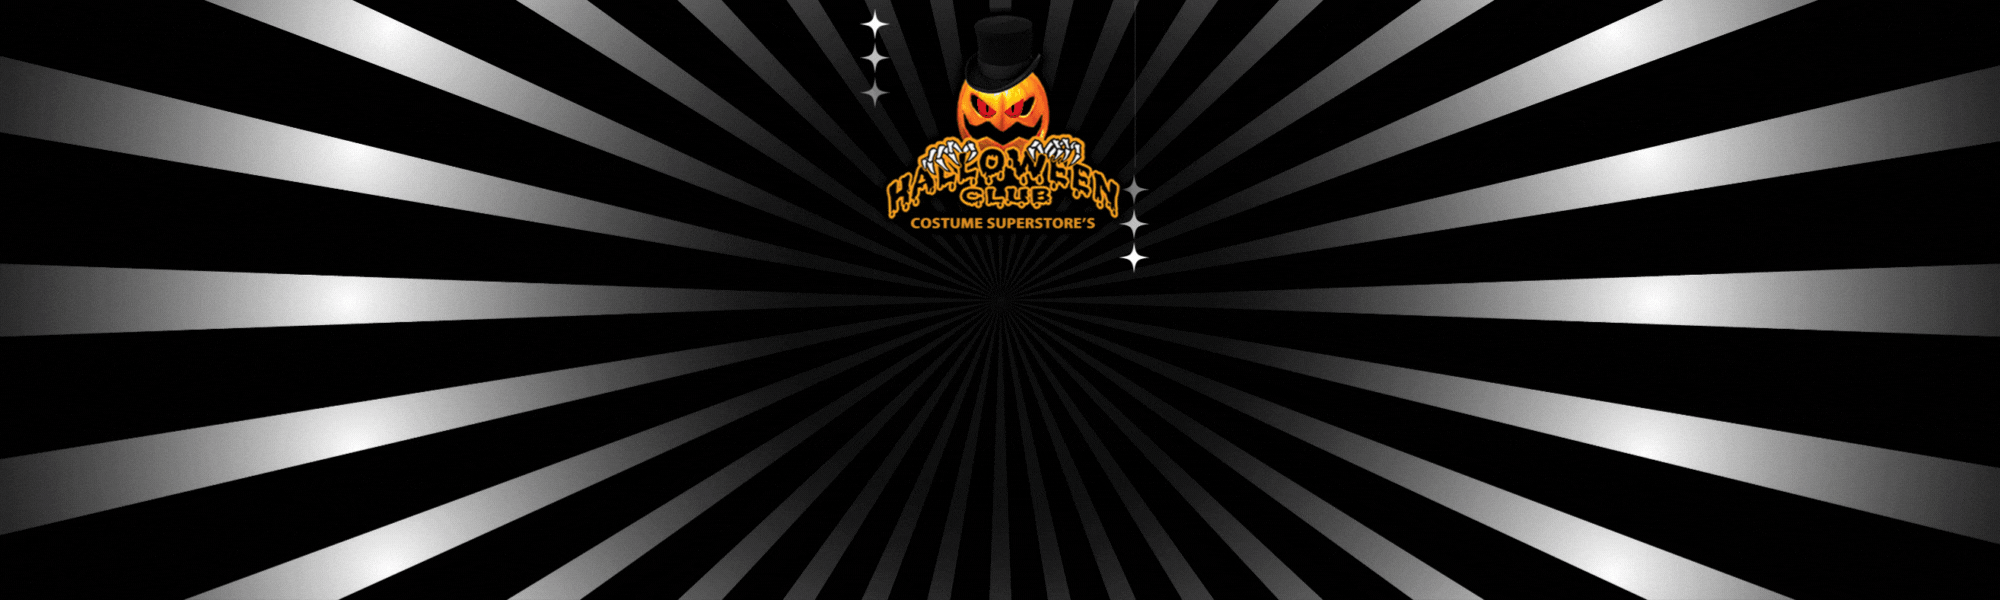 Spook Show - Halloween Festival by Halloween Club